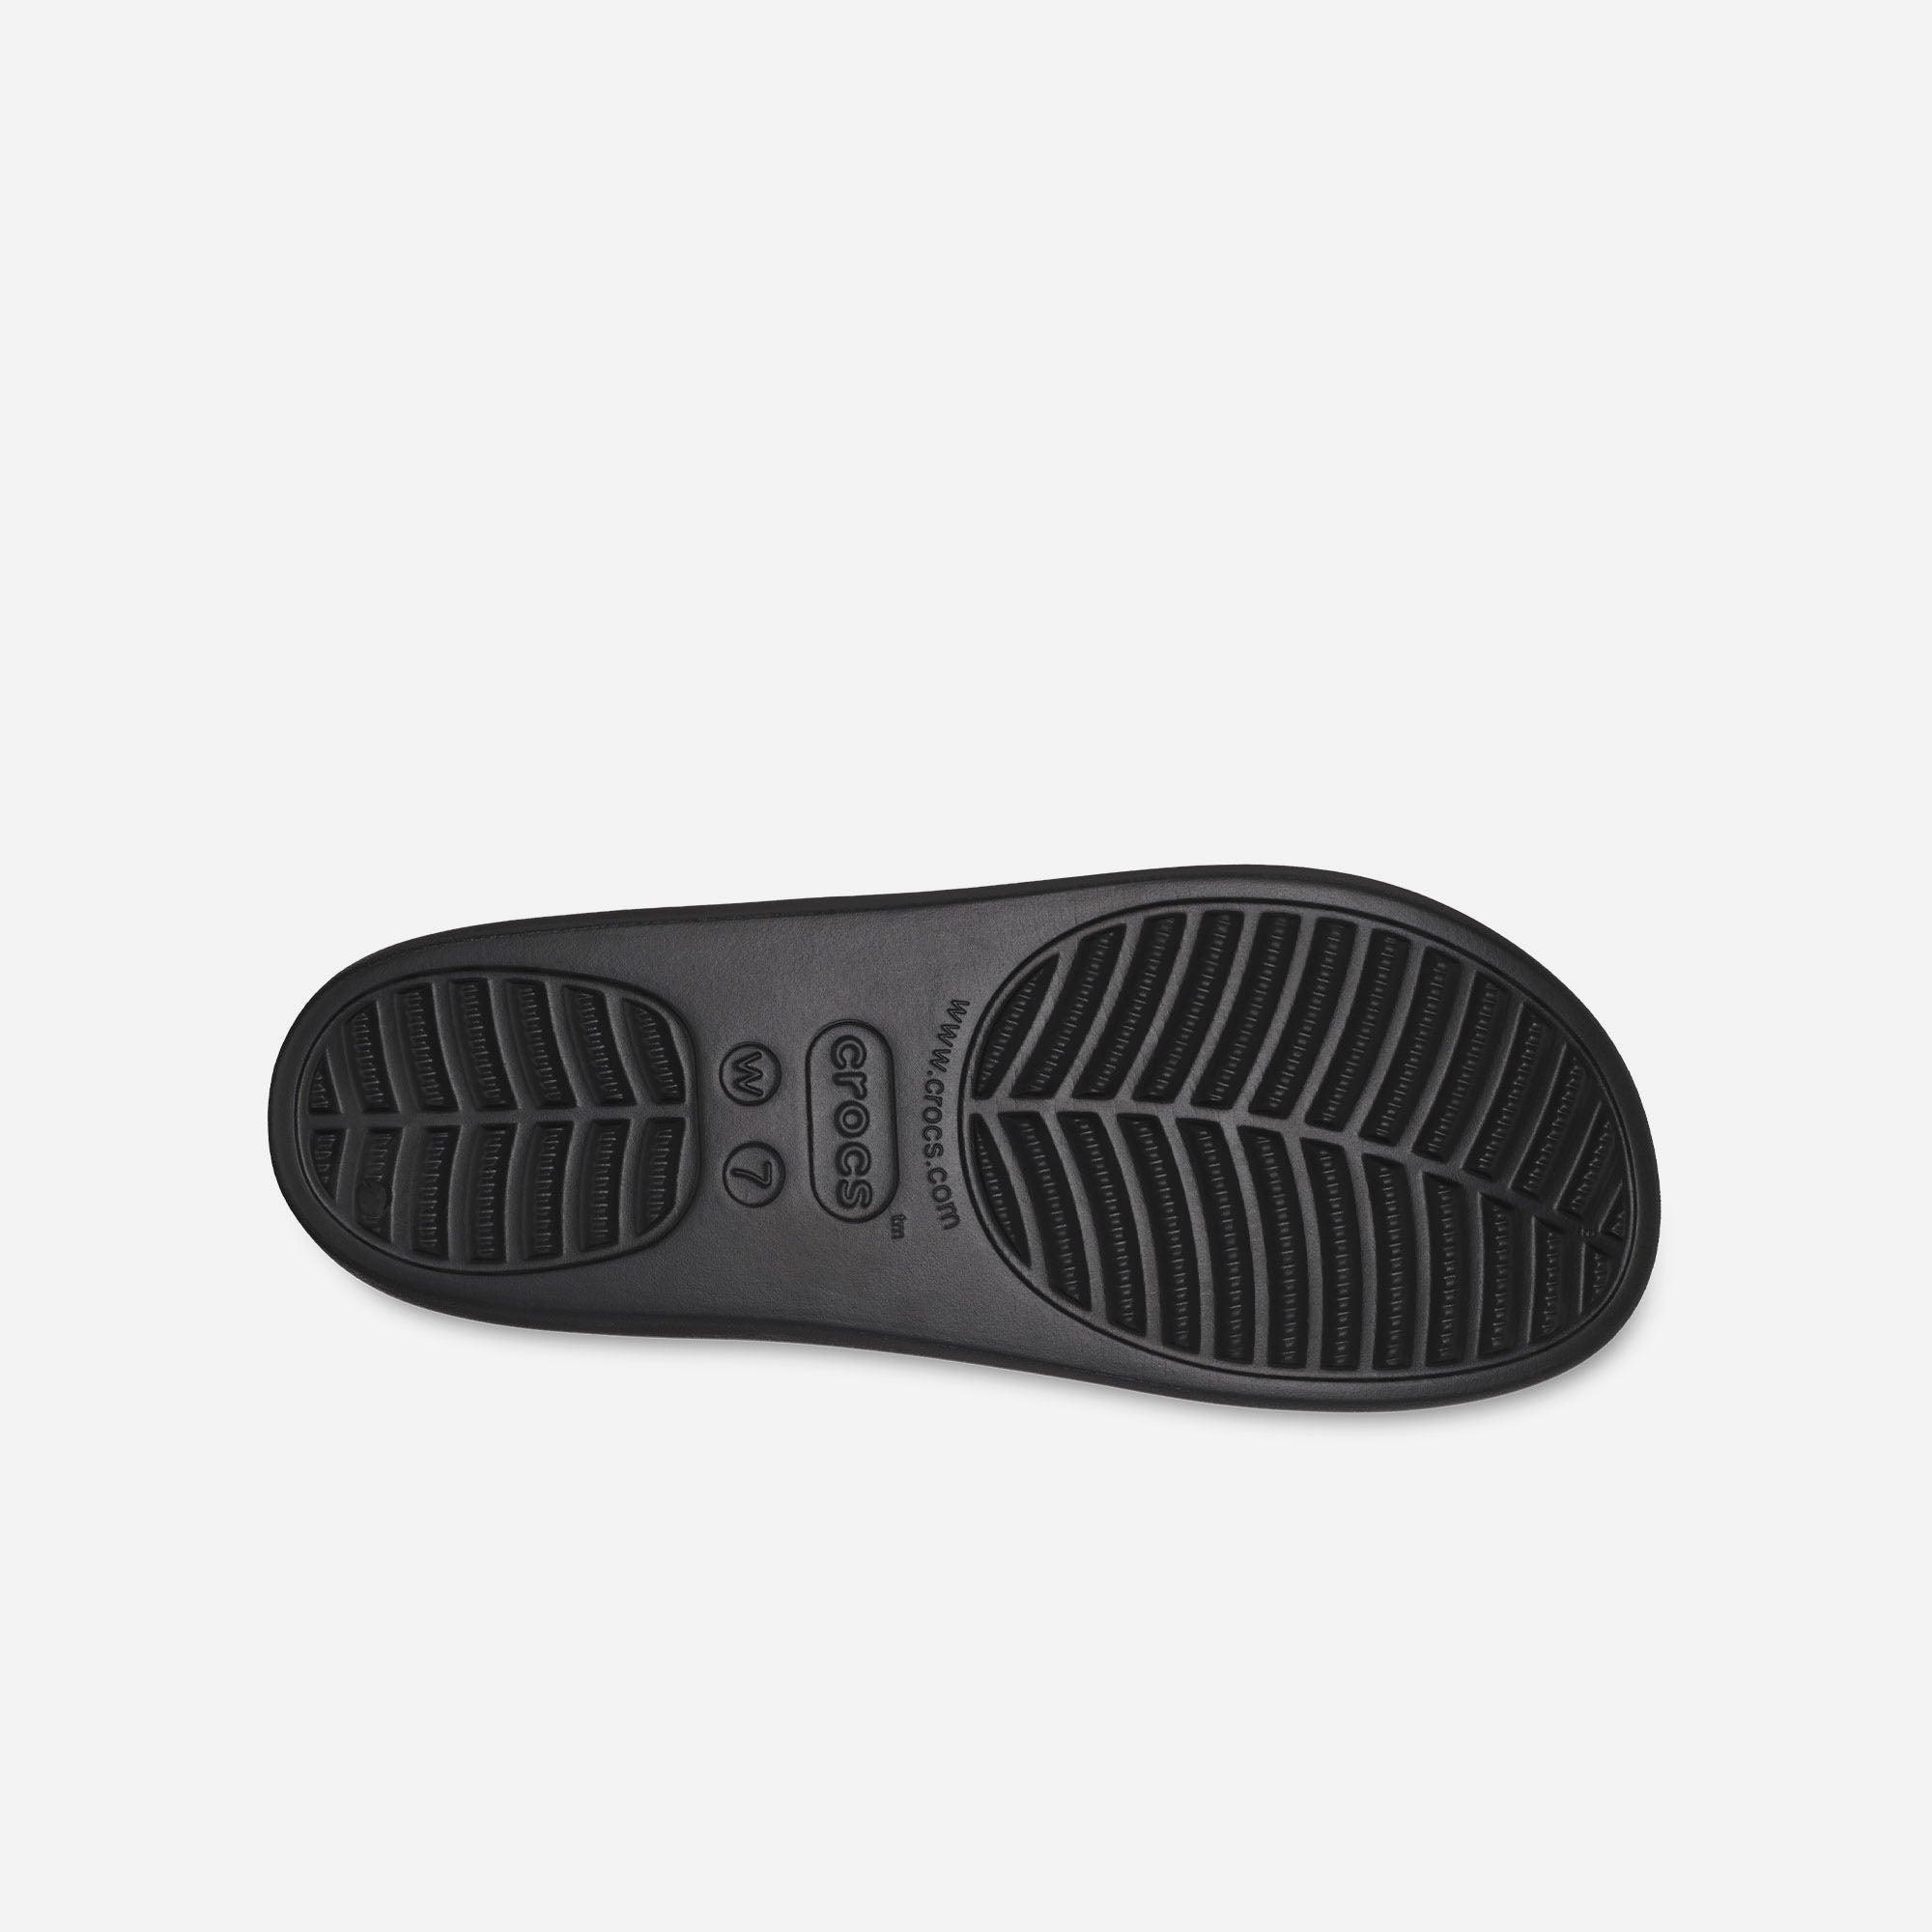 Giày sandal nữ Crocs Baya Platform - 208188-001